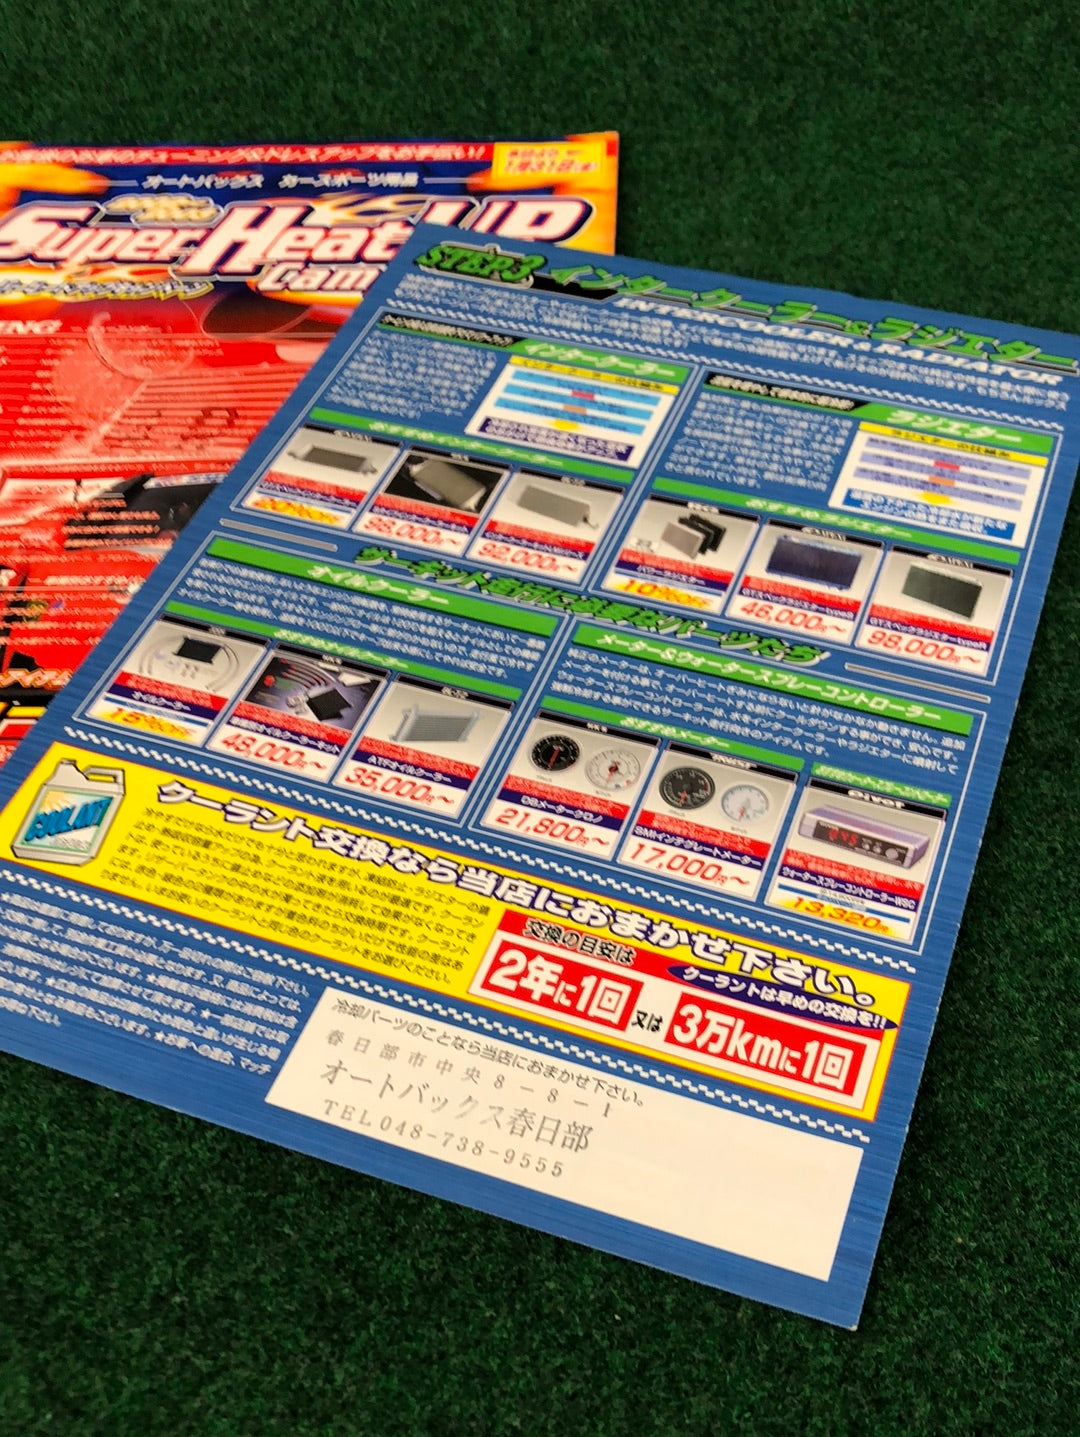 Autobacs - 2003 Super Heat Up & Cooling Tune Campaign Catalog Set